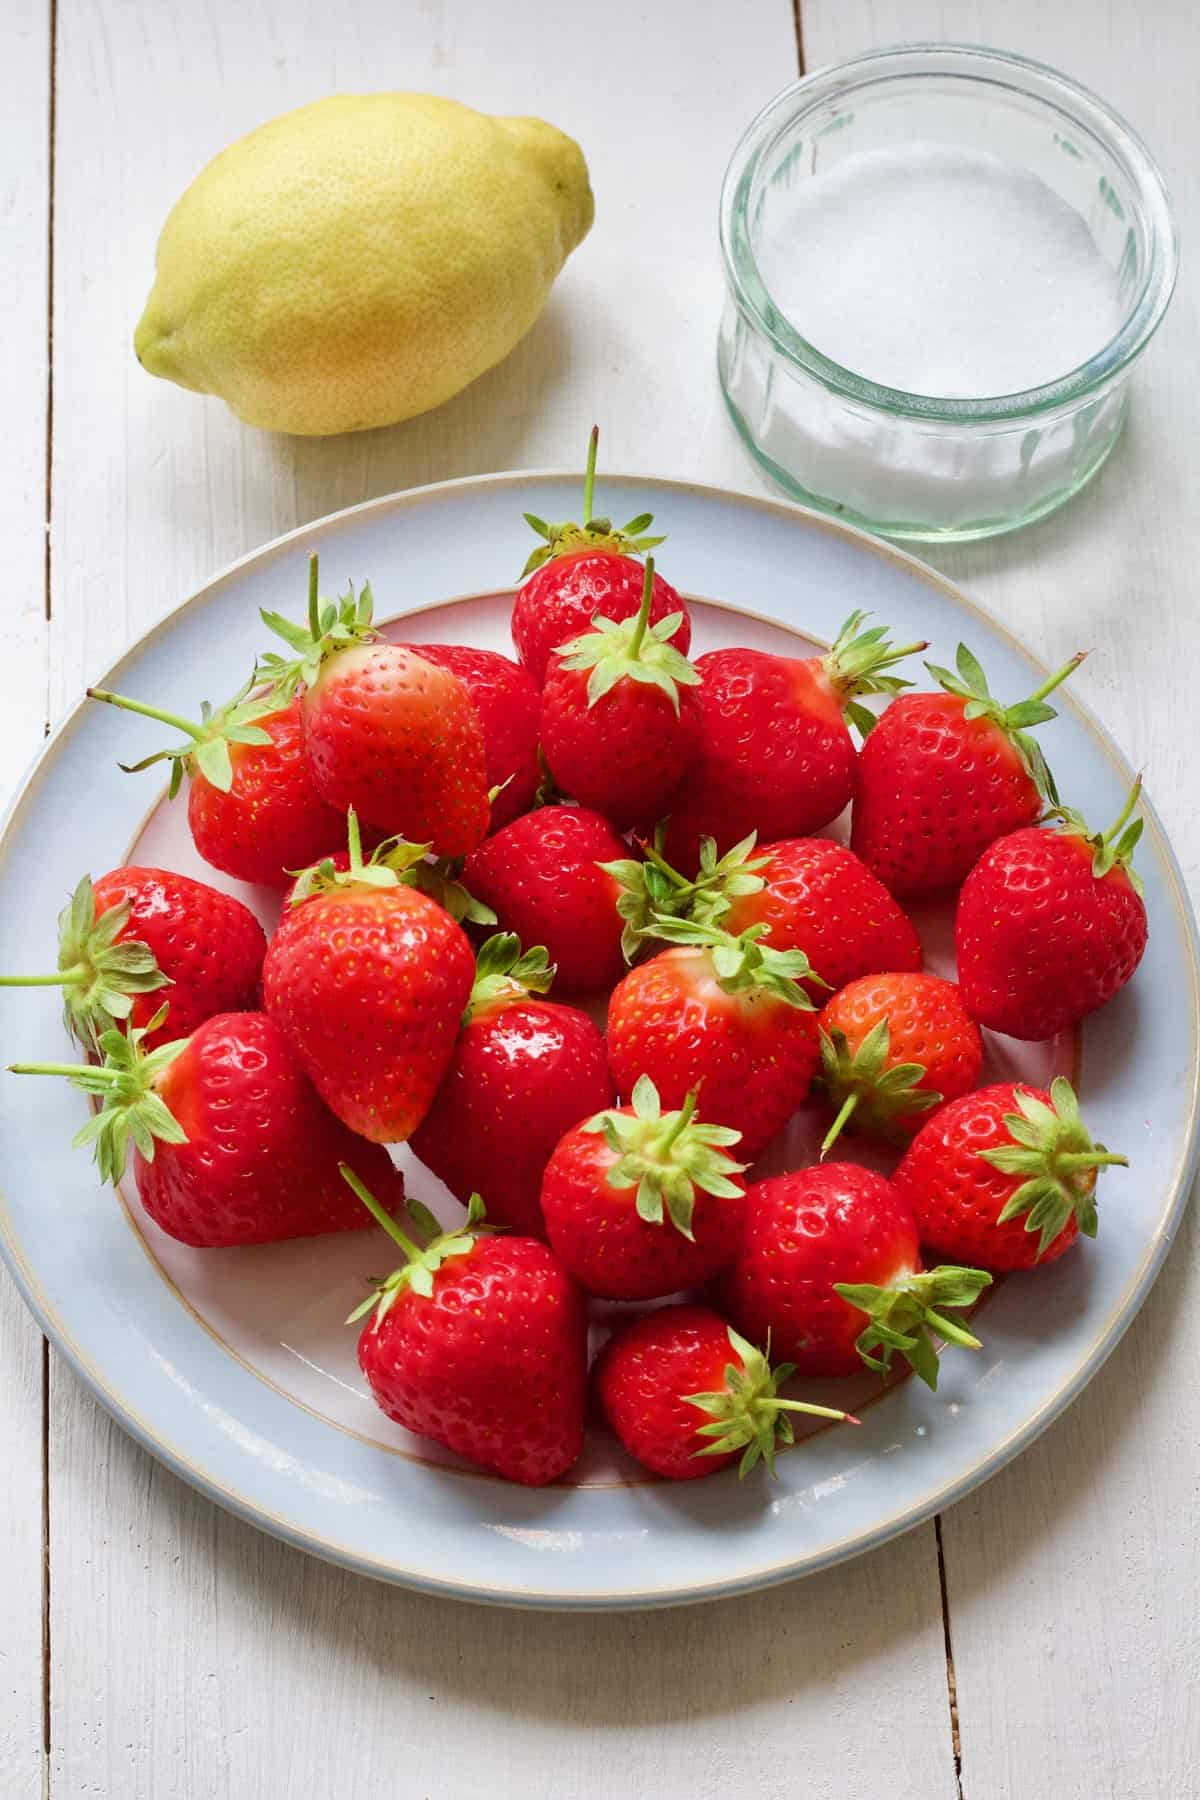 Fresh strawberries on a plate, lemon & bowl with sugar.